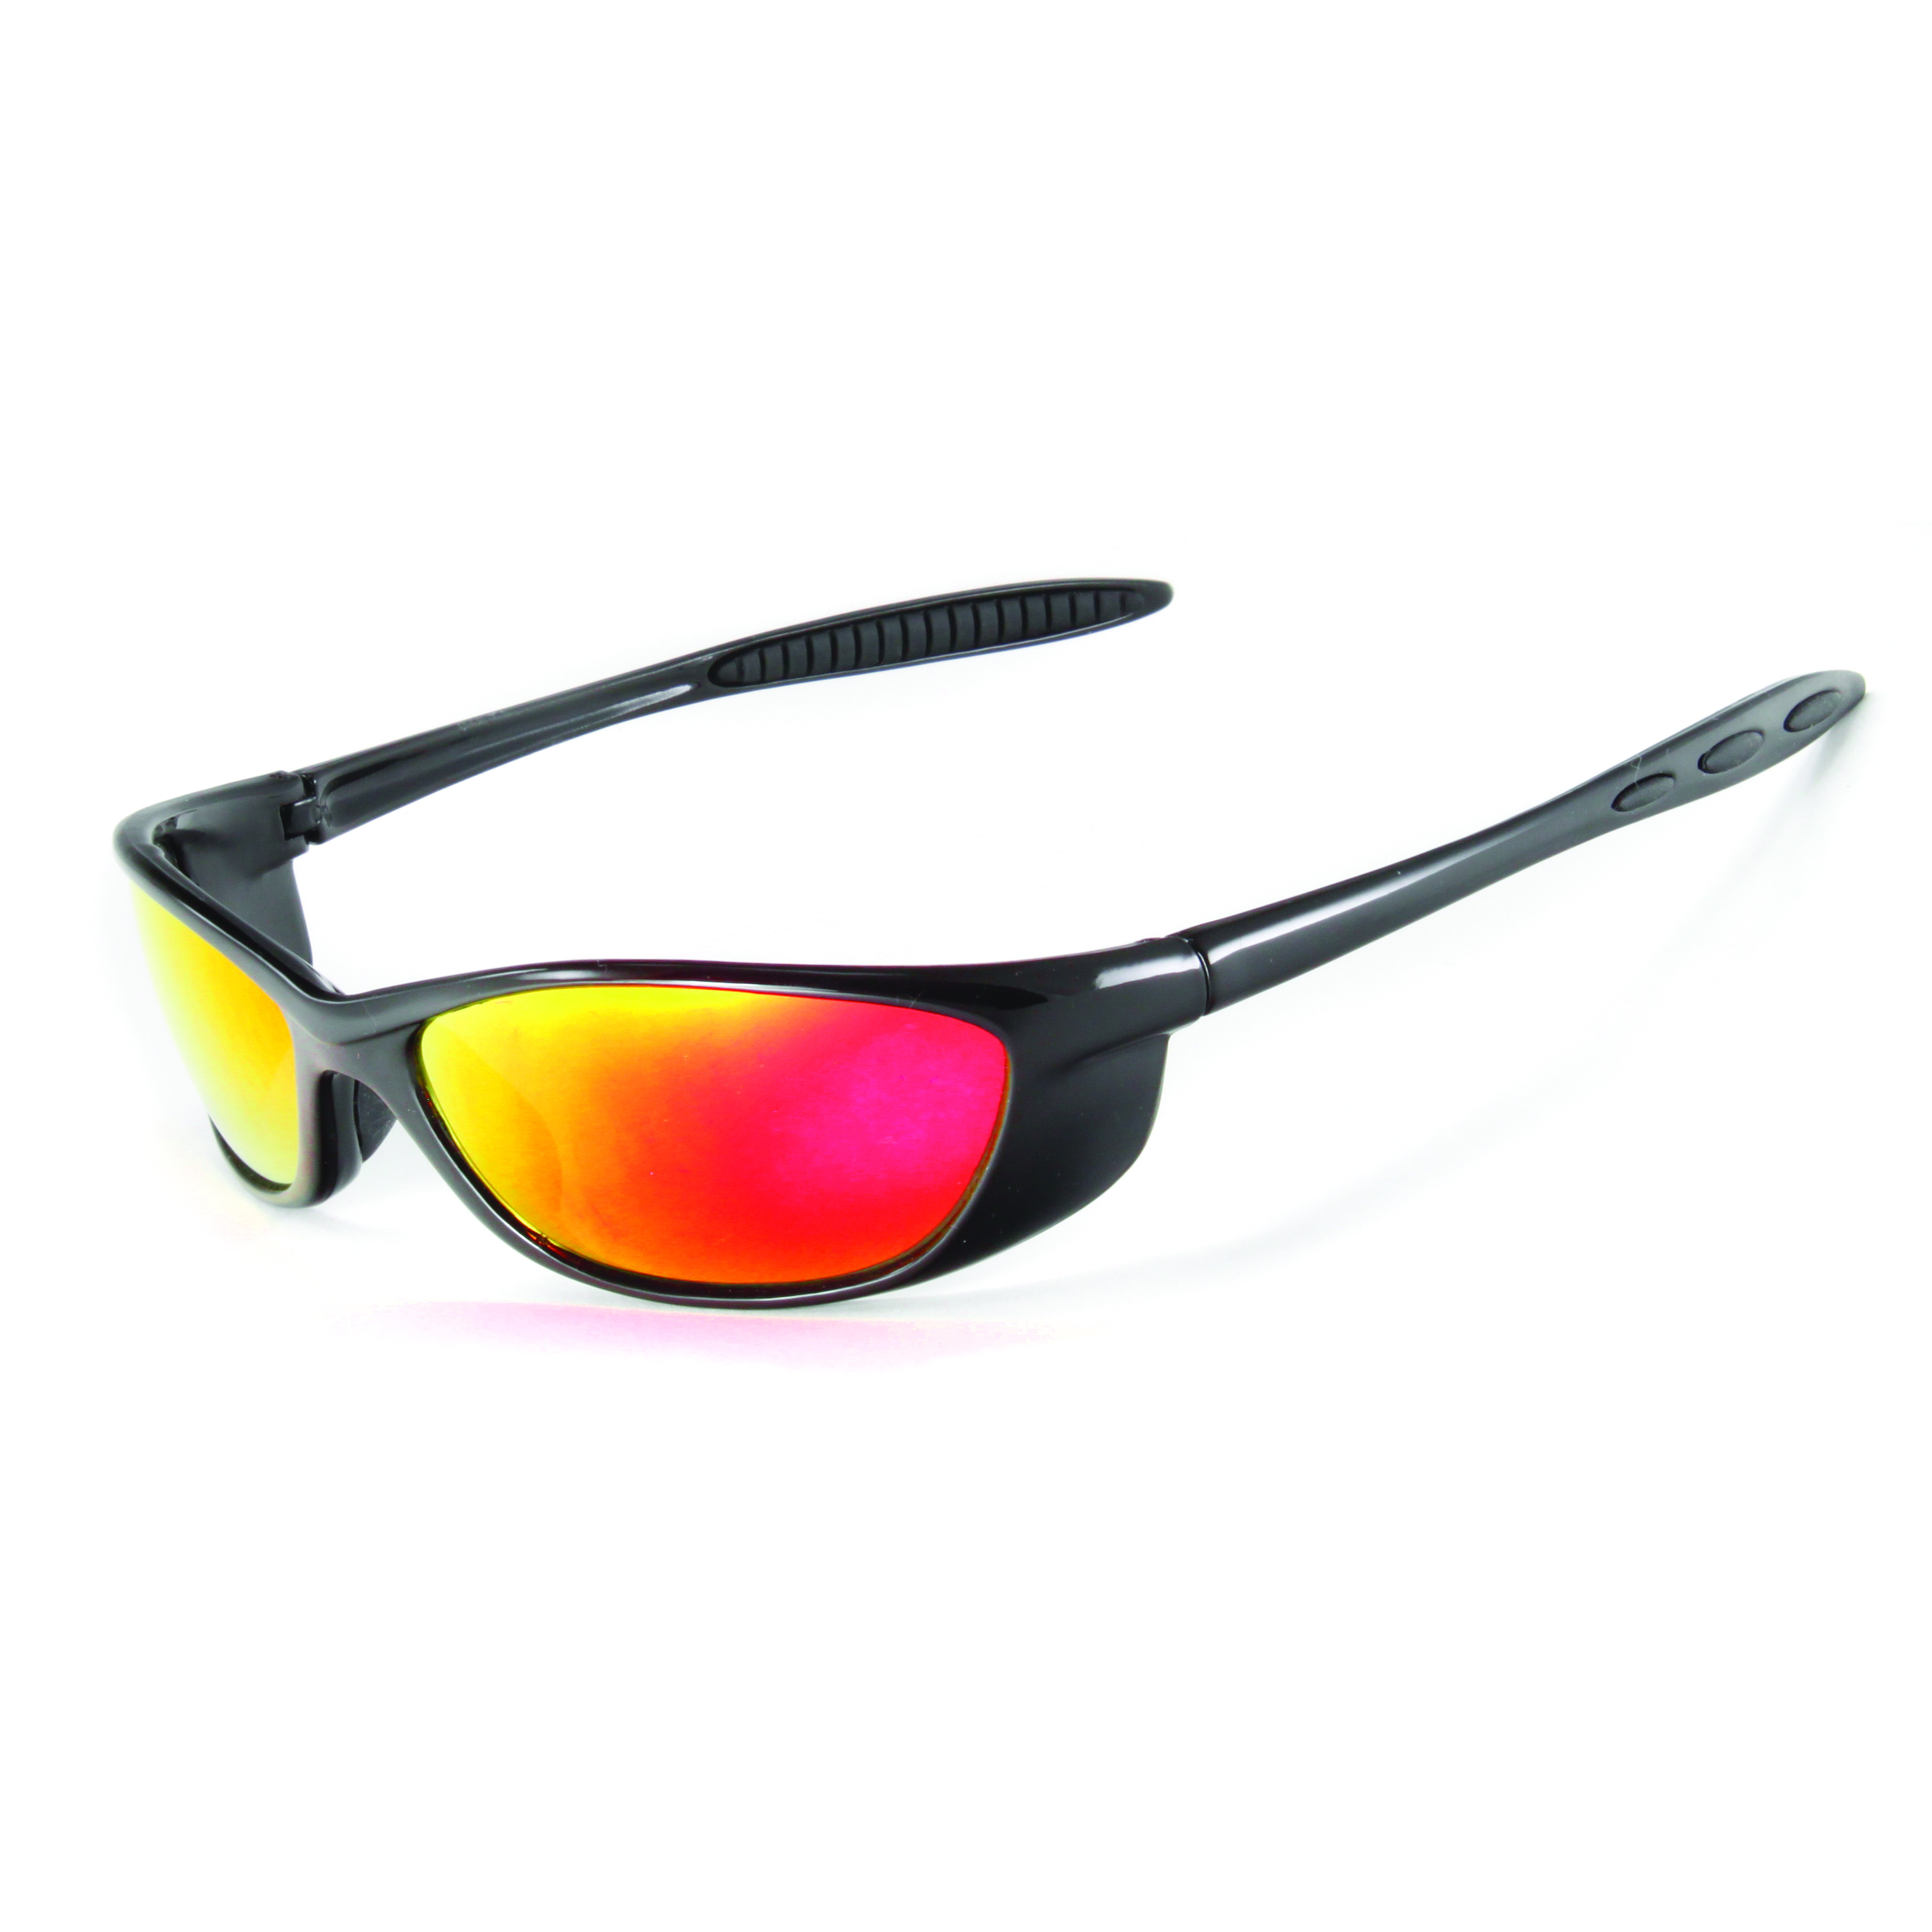 Spyder Sport Safety Glasses w/ Black Frame and Red Mirror  Lens